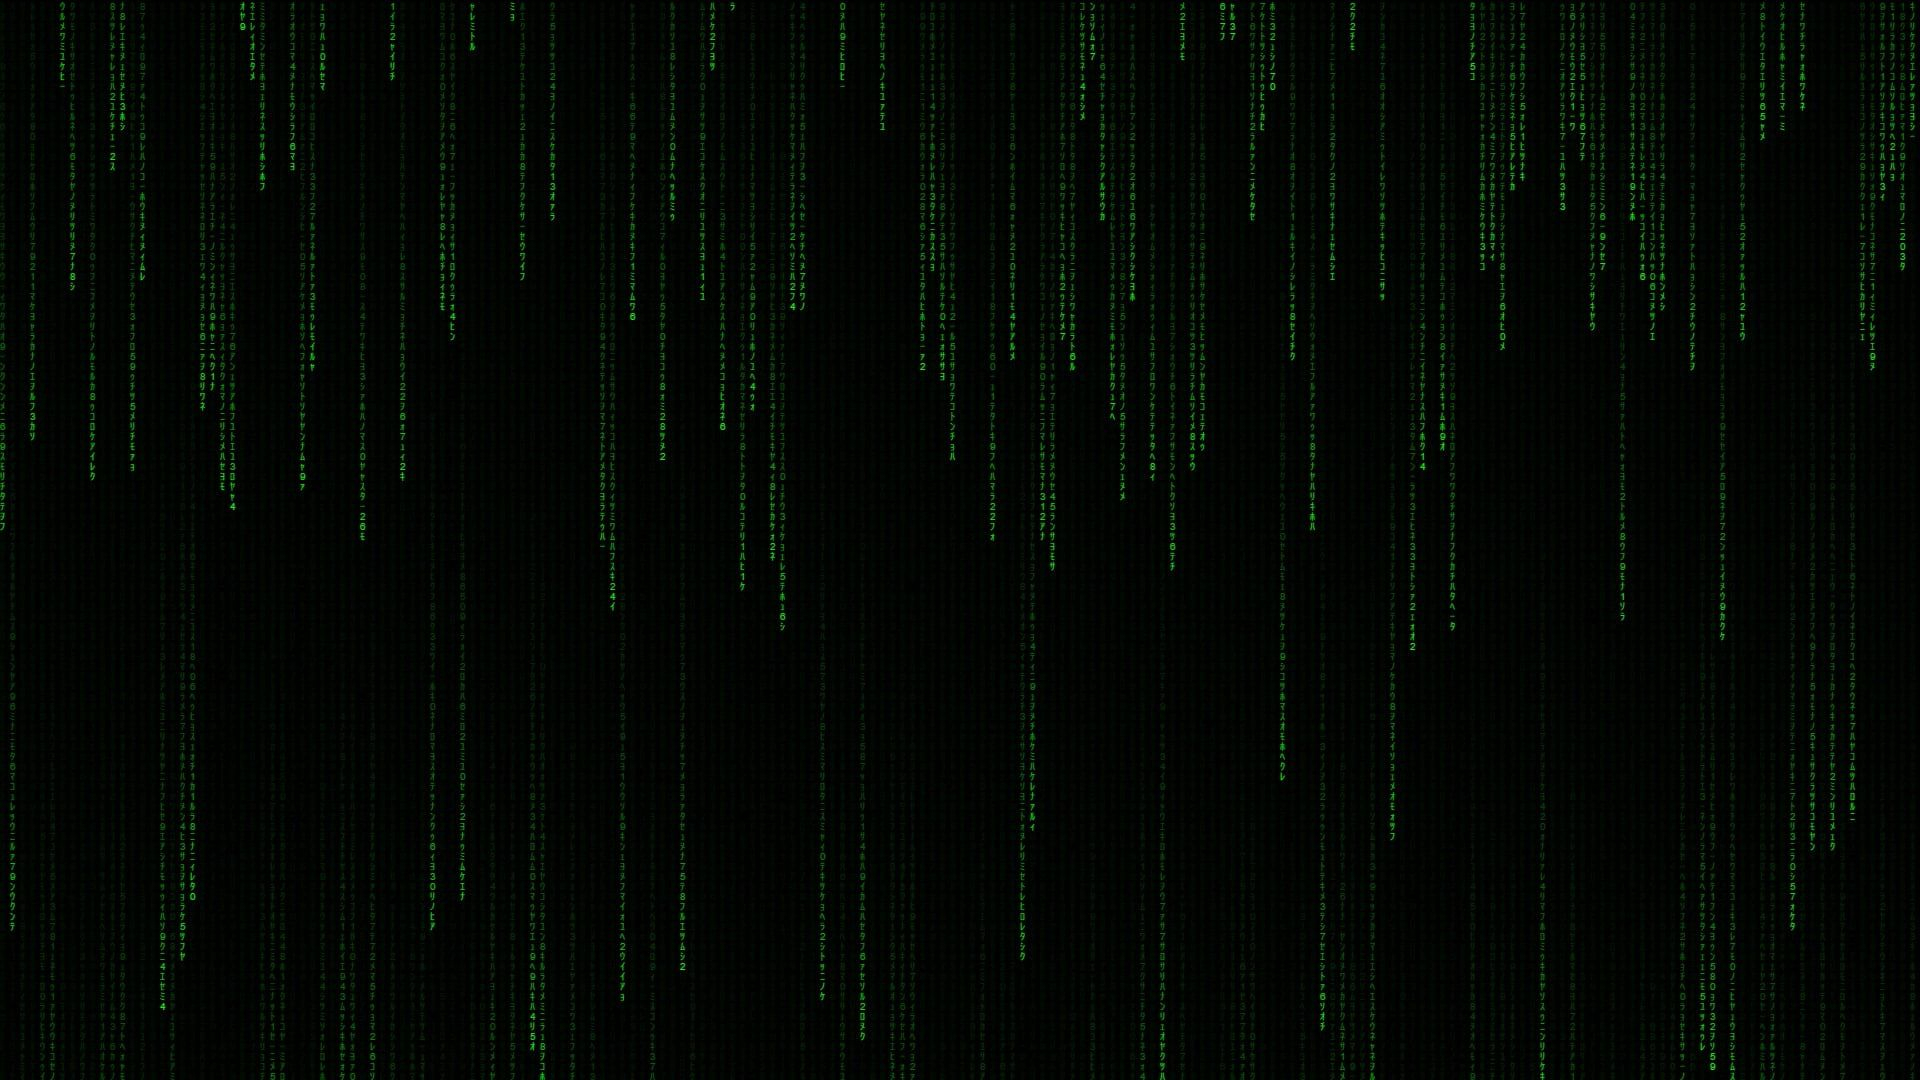 1920x1080 matrix code background #abstract The Matrix #1080P #wallpaper #hdwallpaper #desktop | Coding, Matrix, Code wallpaper